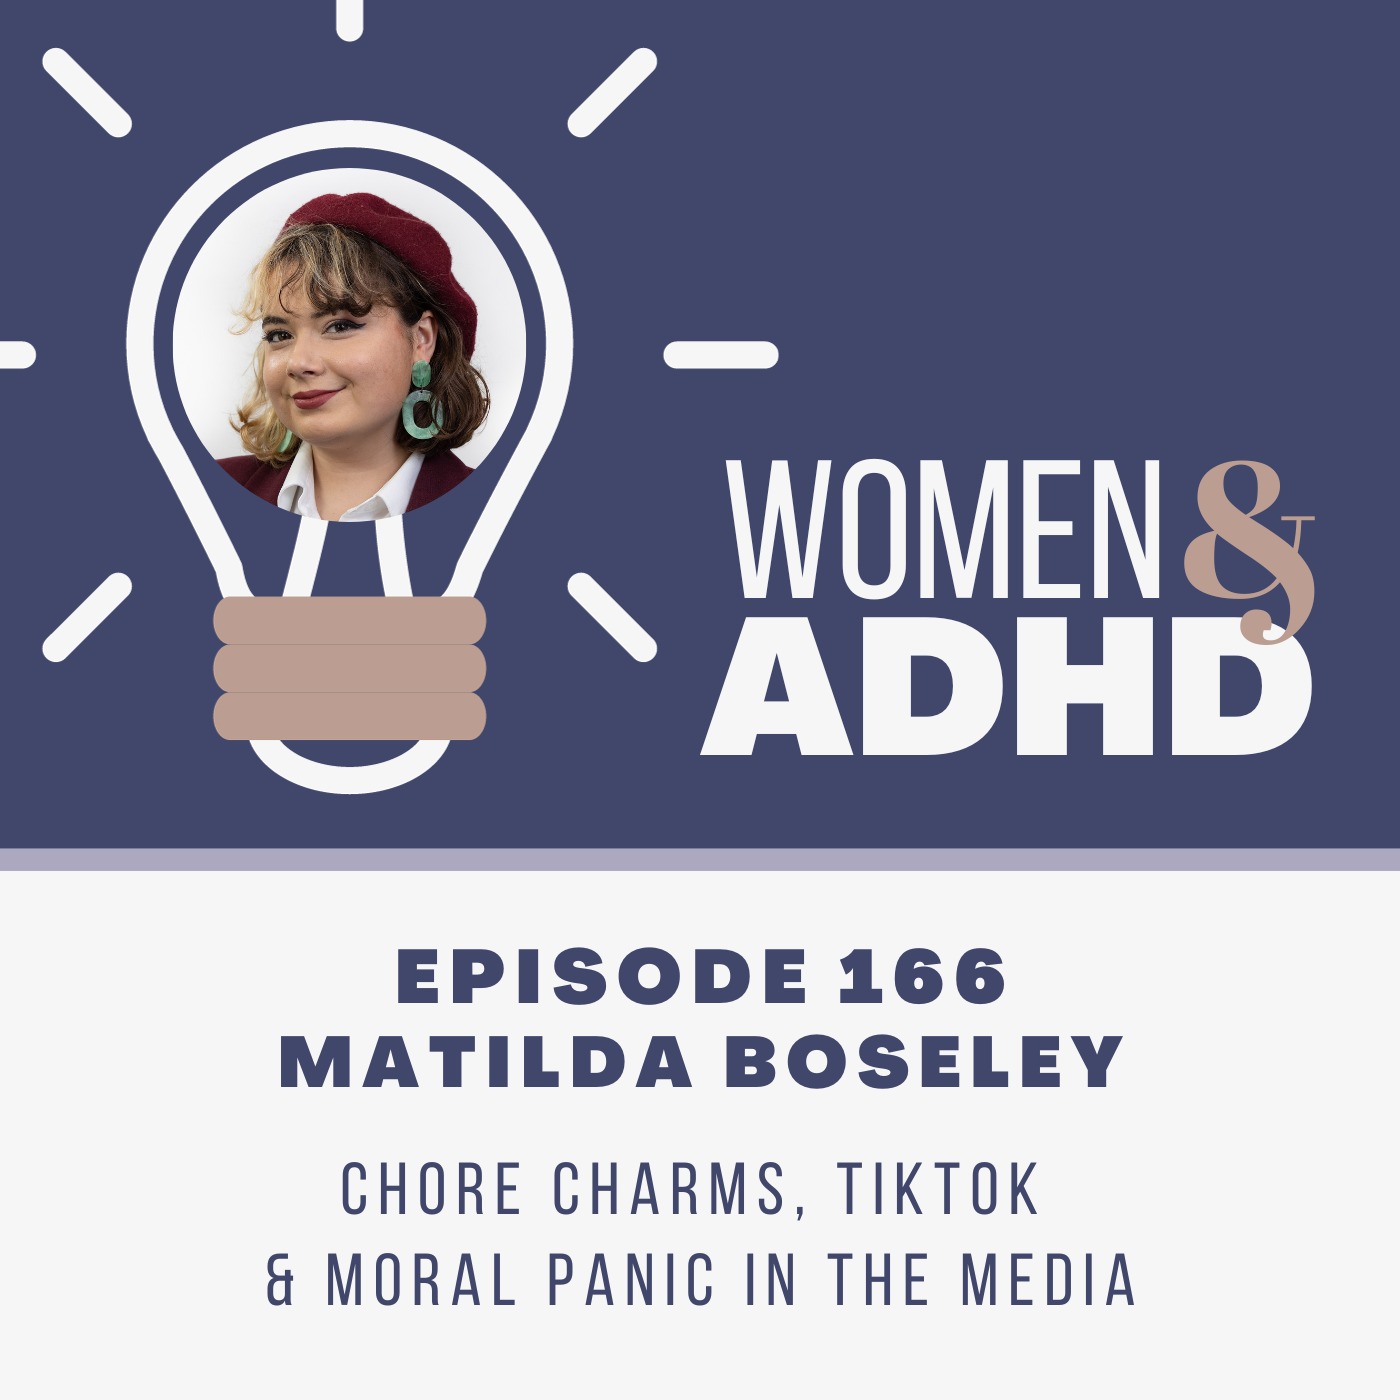 Matilda Boseley: Chore charms, TikTok & moral panic in the media